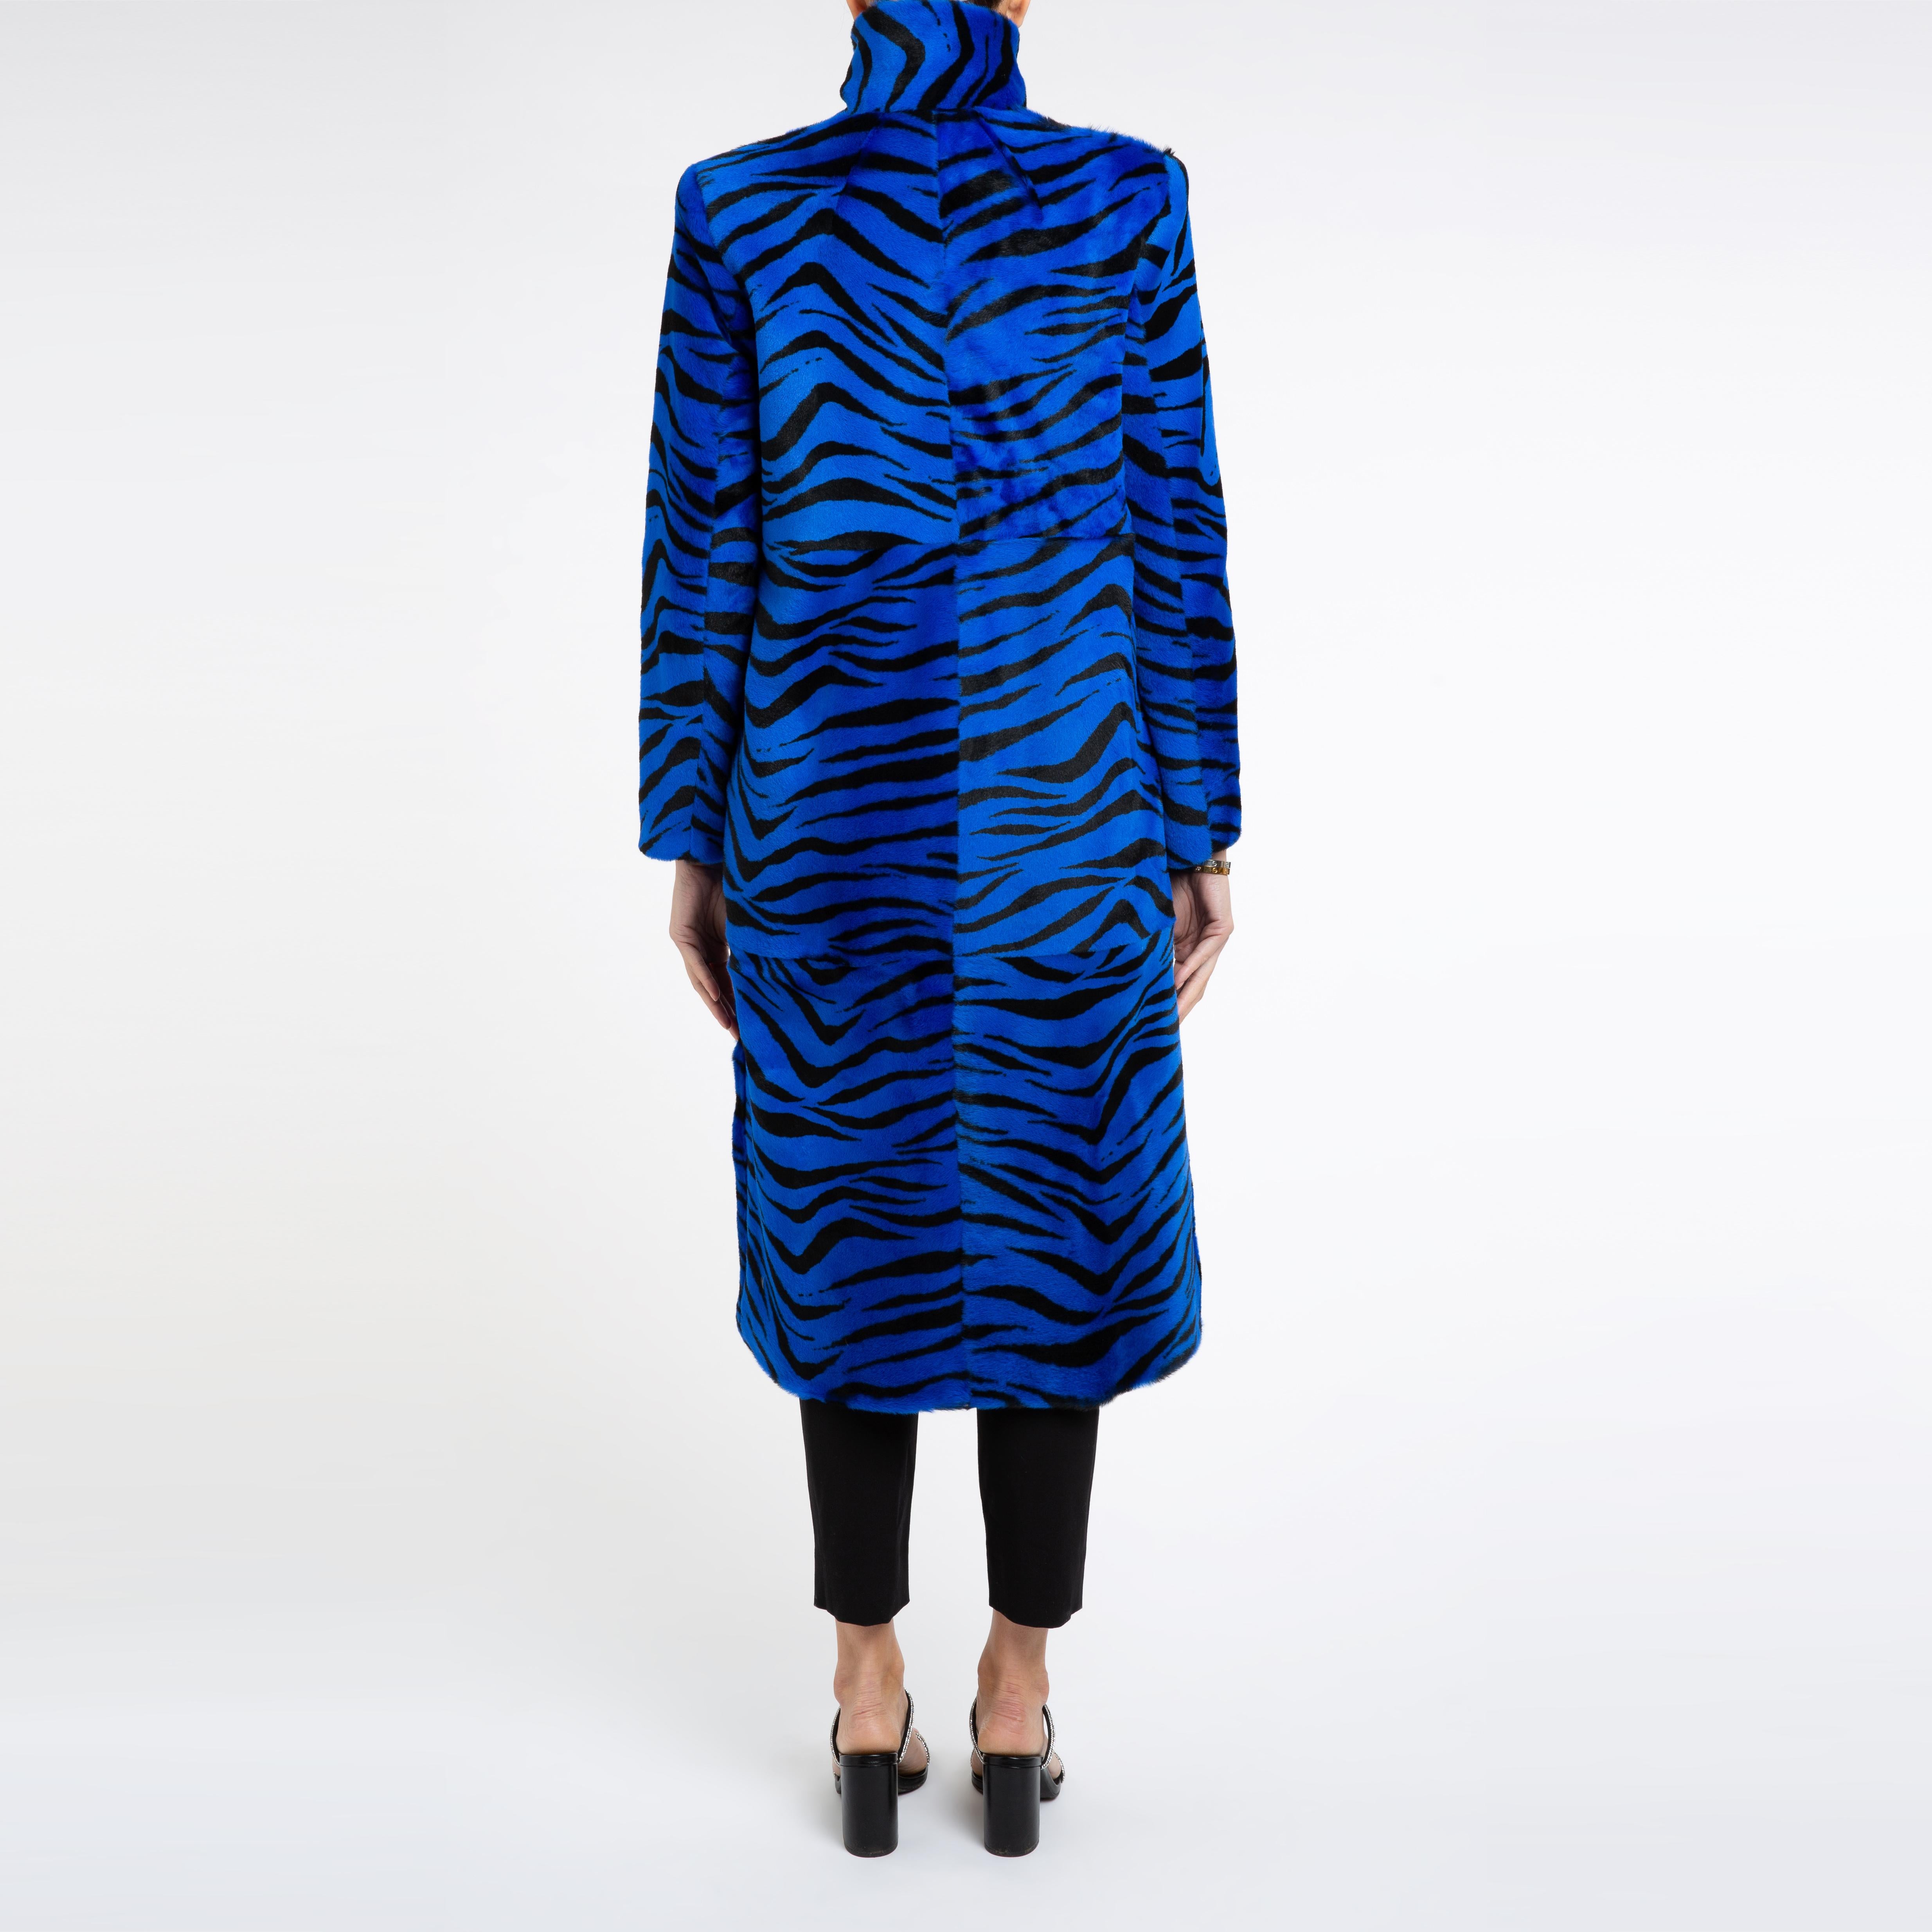 Verheyen London Shearling Coat in Blue Zebra Print size uk 8-10 For Sale 4